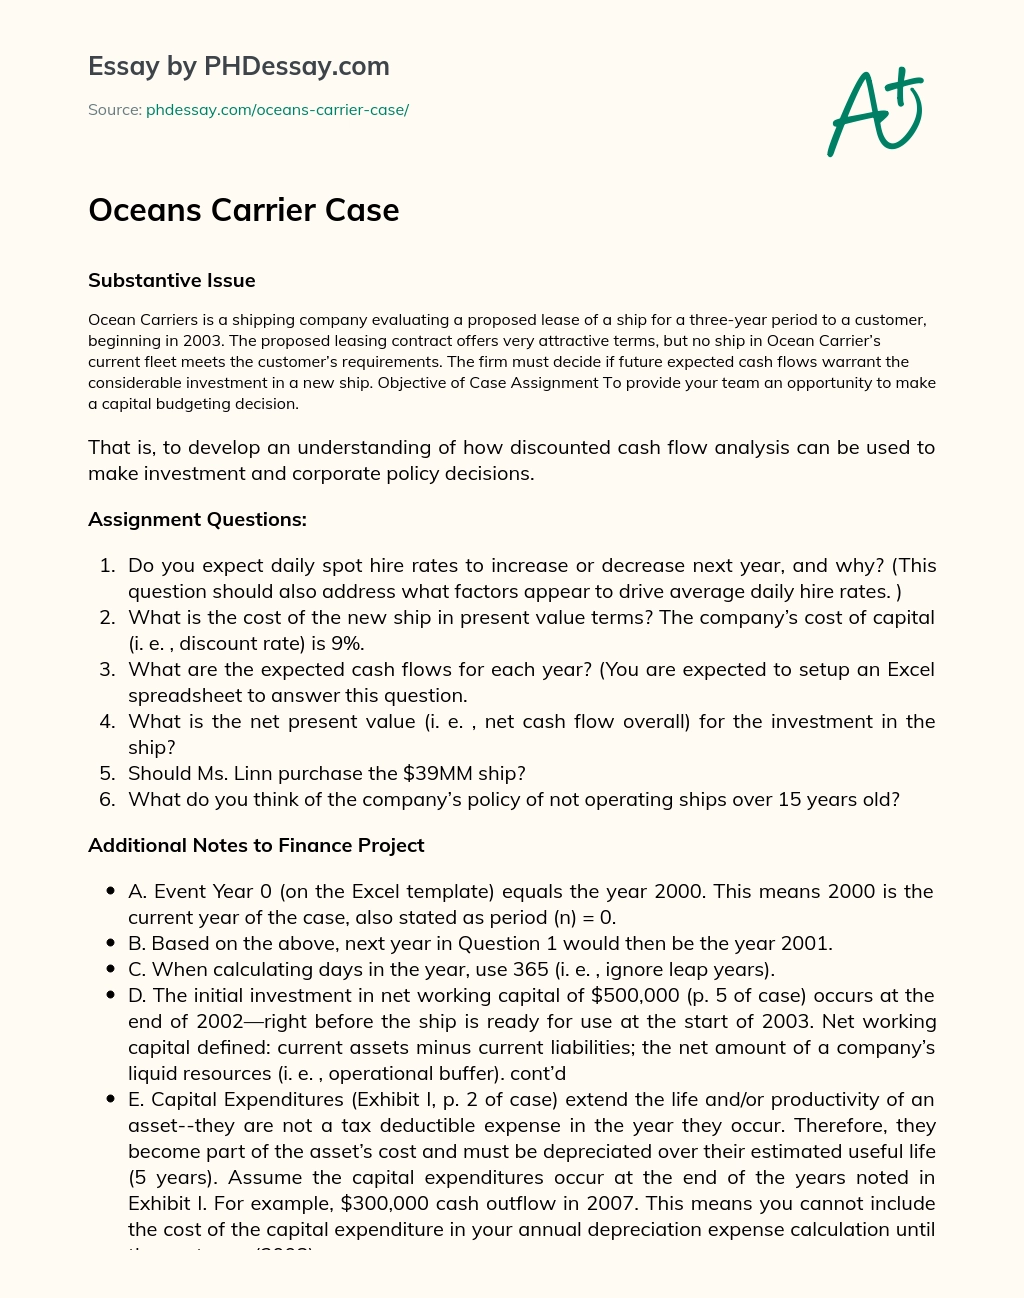 Oceans Carrier Case essay